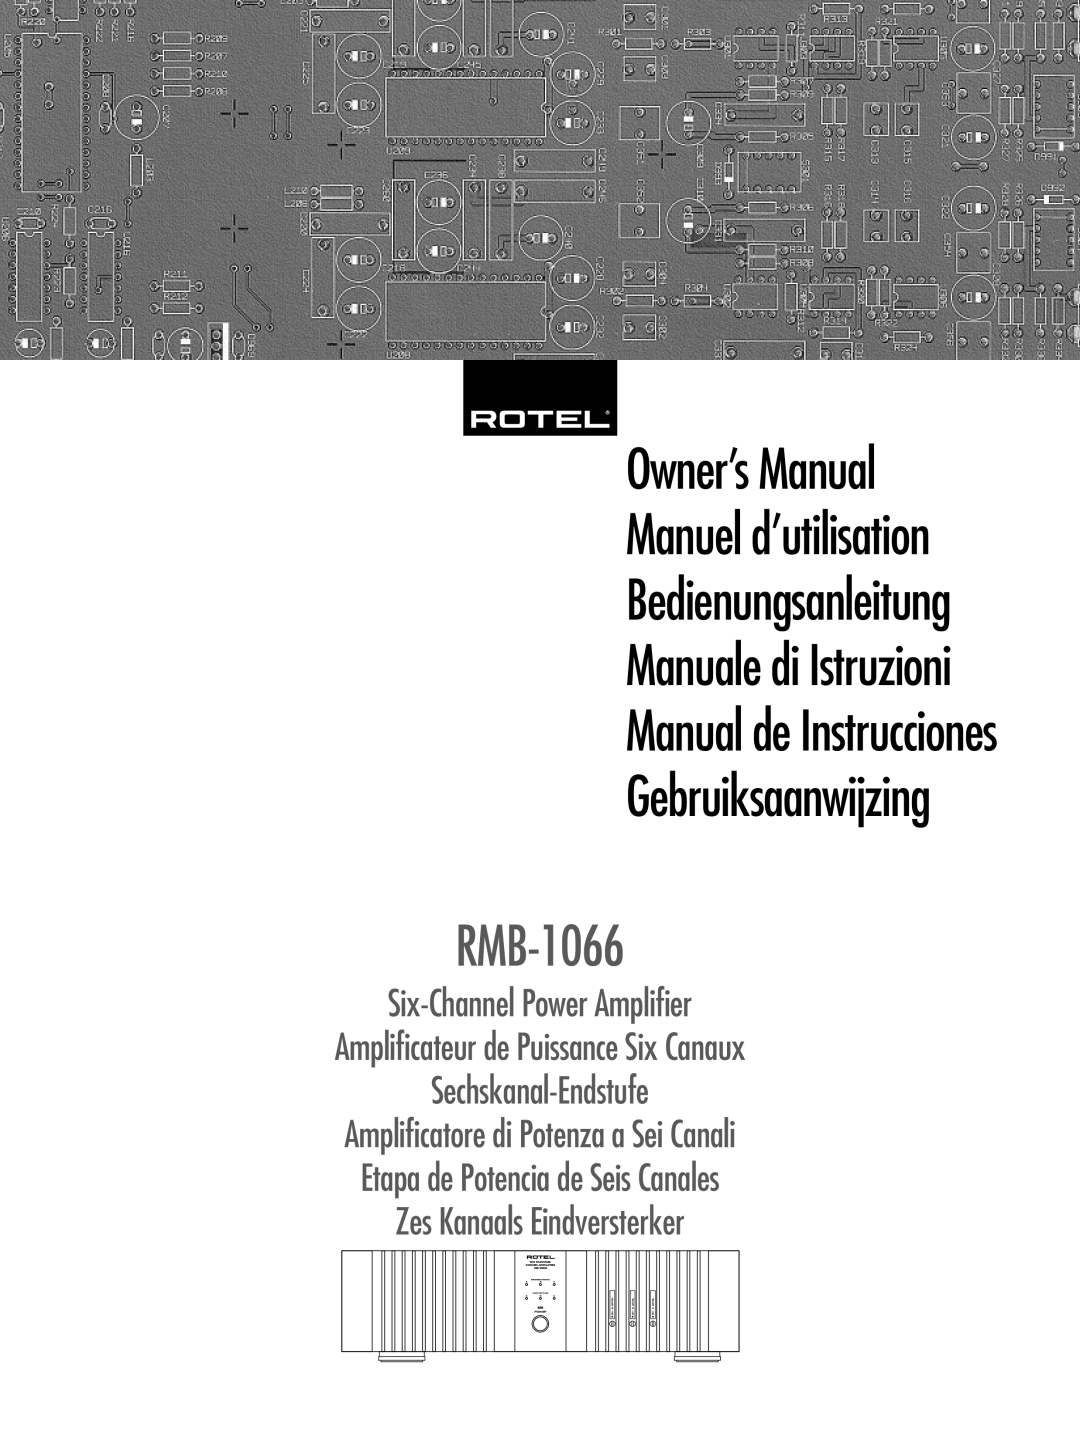 Rotel RMB-1066 owner manual Manual de Instrucciones, Gebruiksaanwijzing, Manuale di Istruzioni, Bedienungsanleitung, Power 